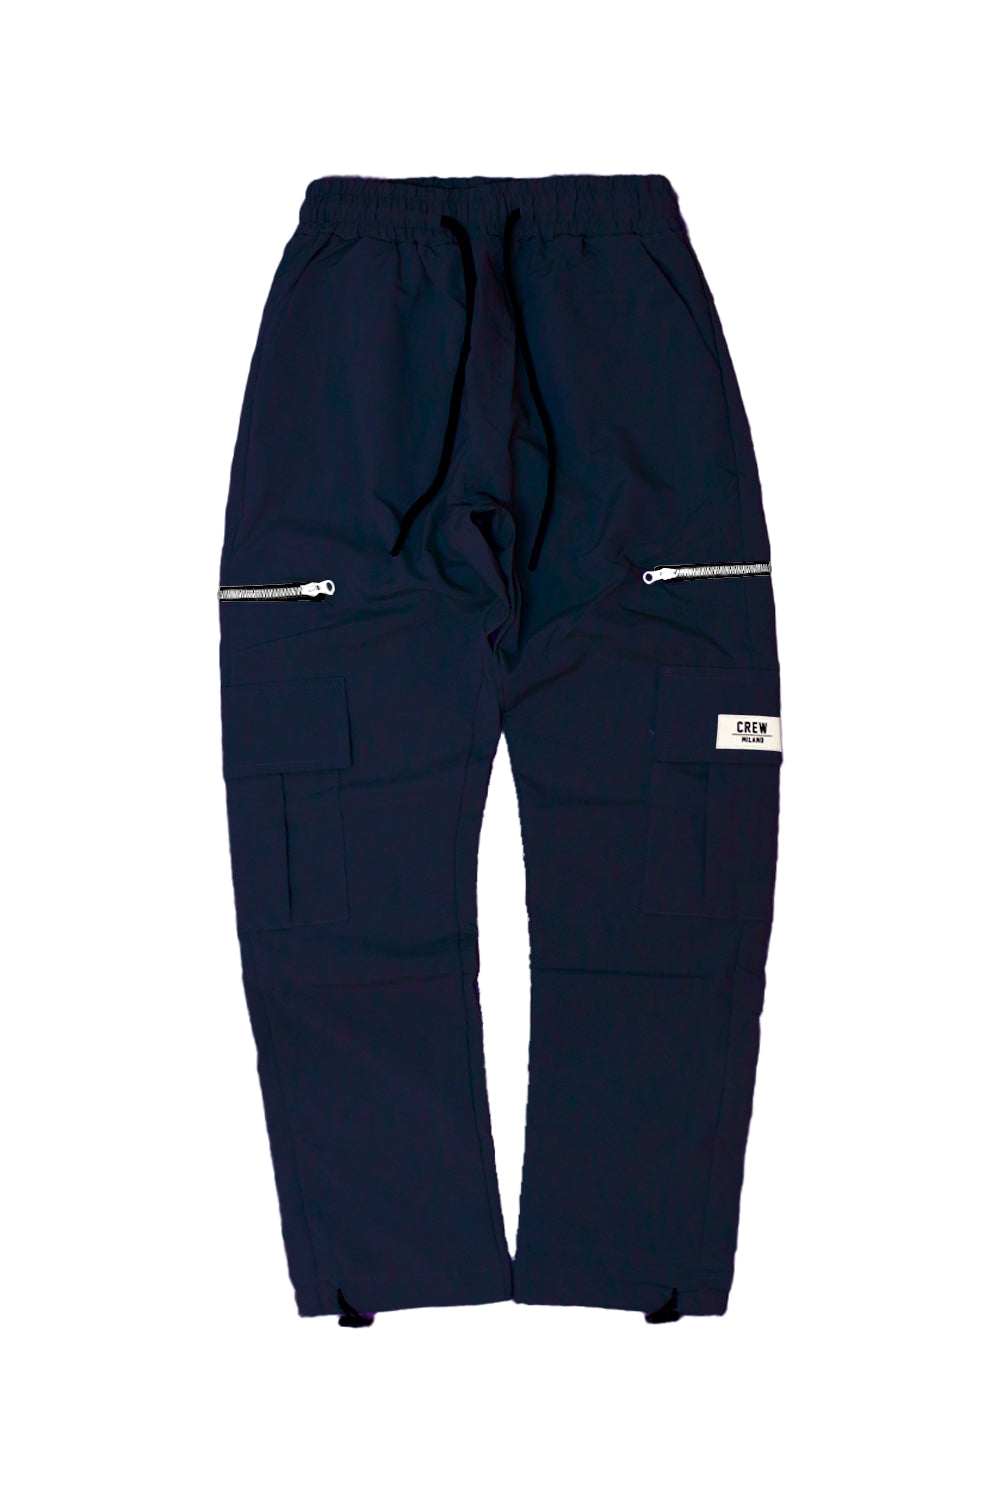 CREW Dark Blue Cargo Pants Zipper Lace